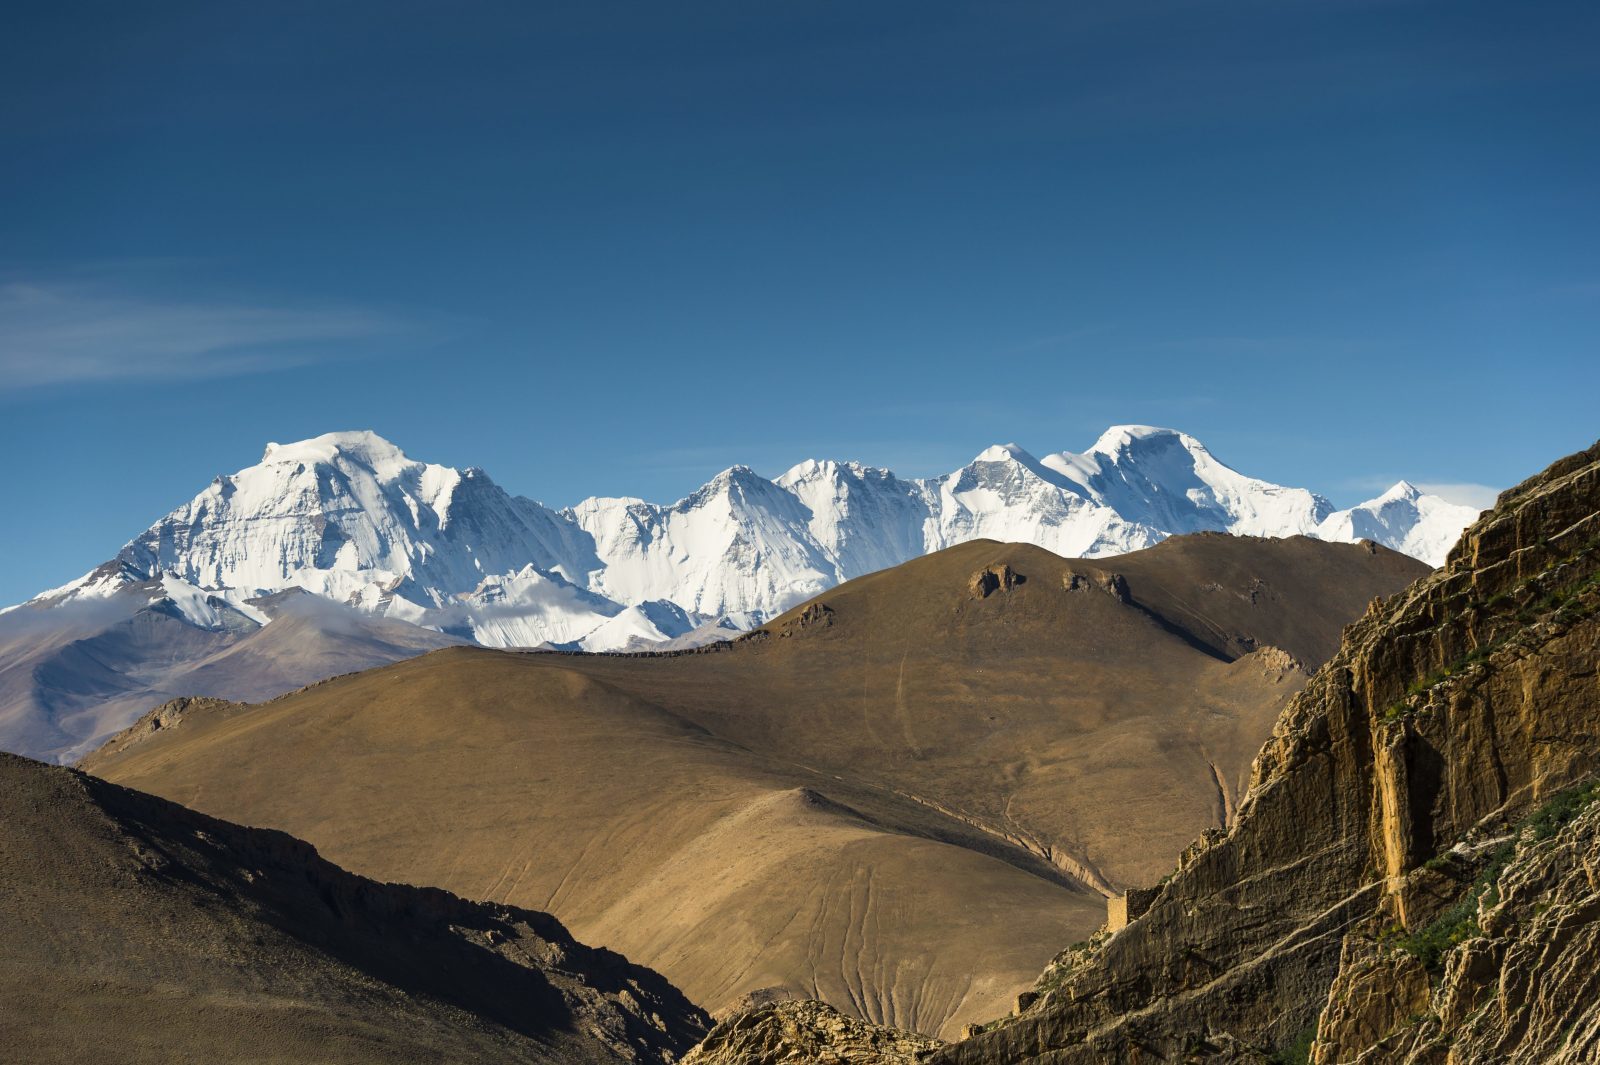 The Tibetan plateau